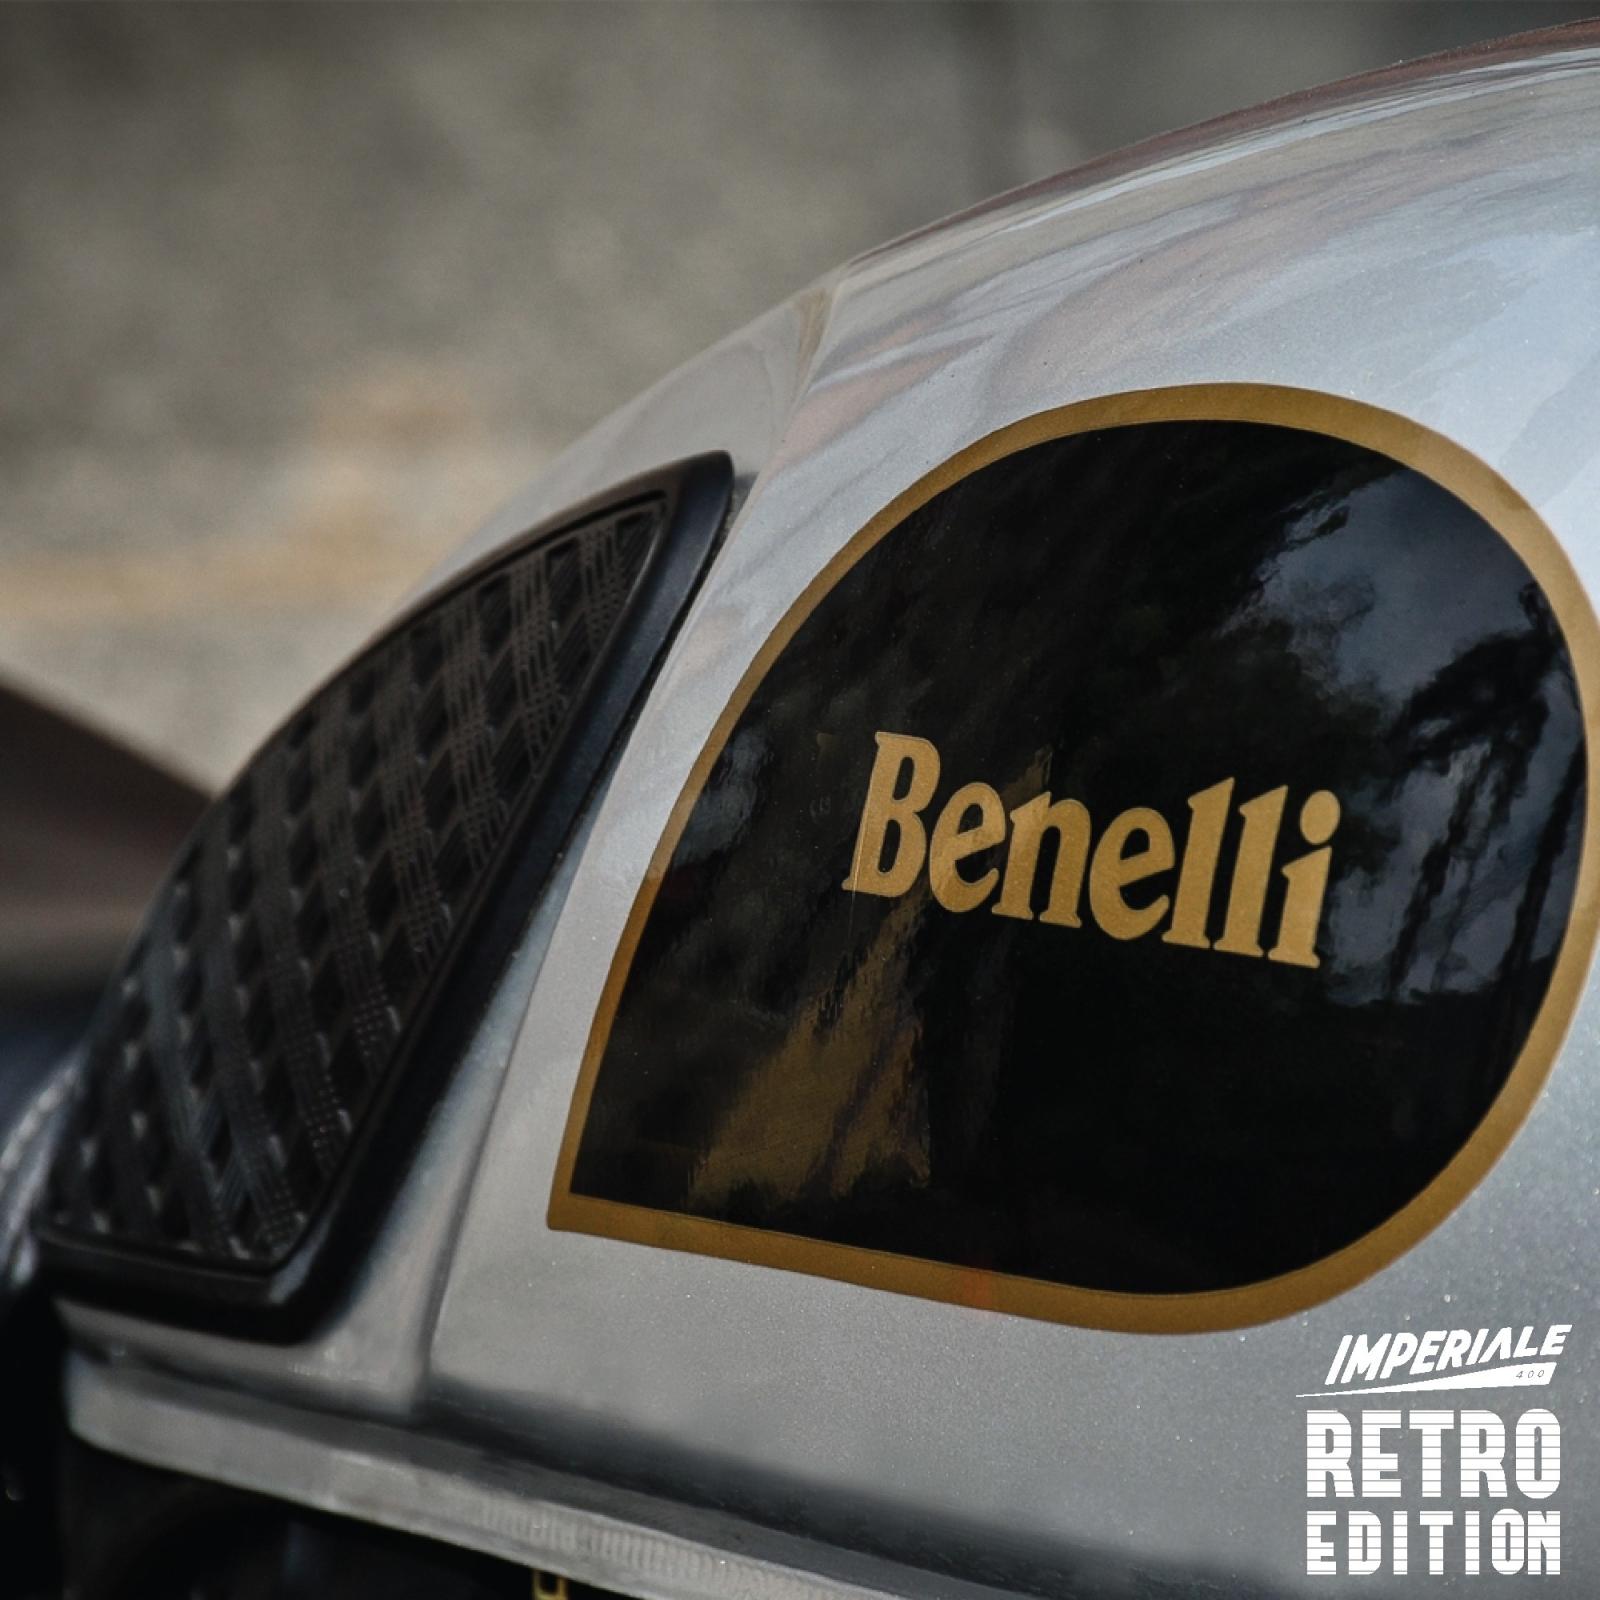 2021 Benelli Imperiale400